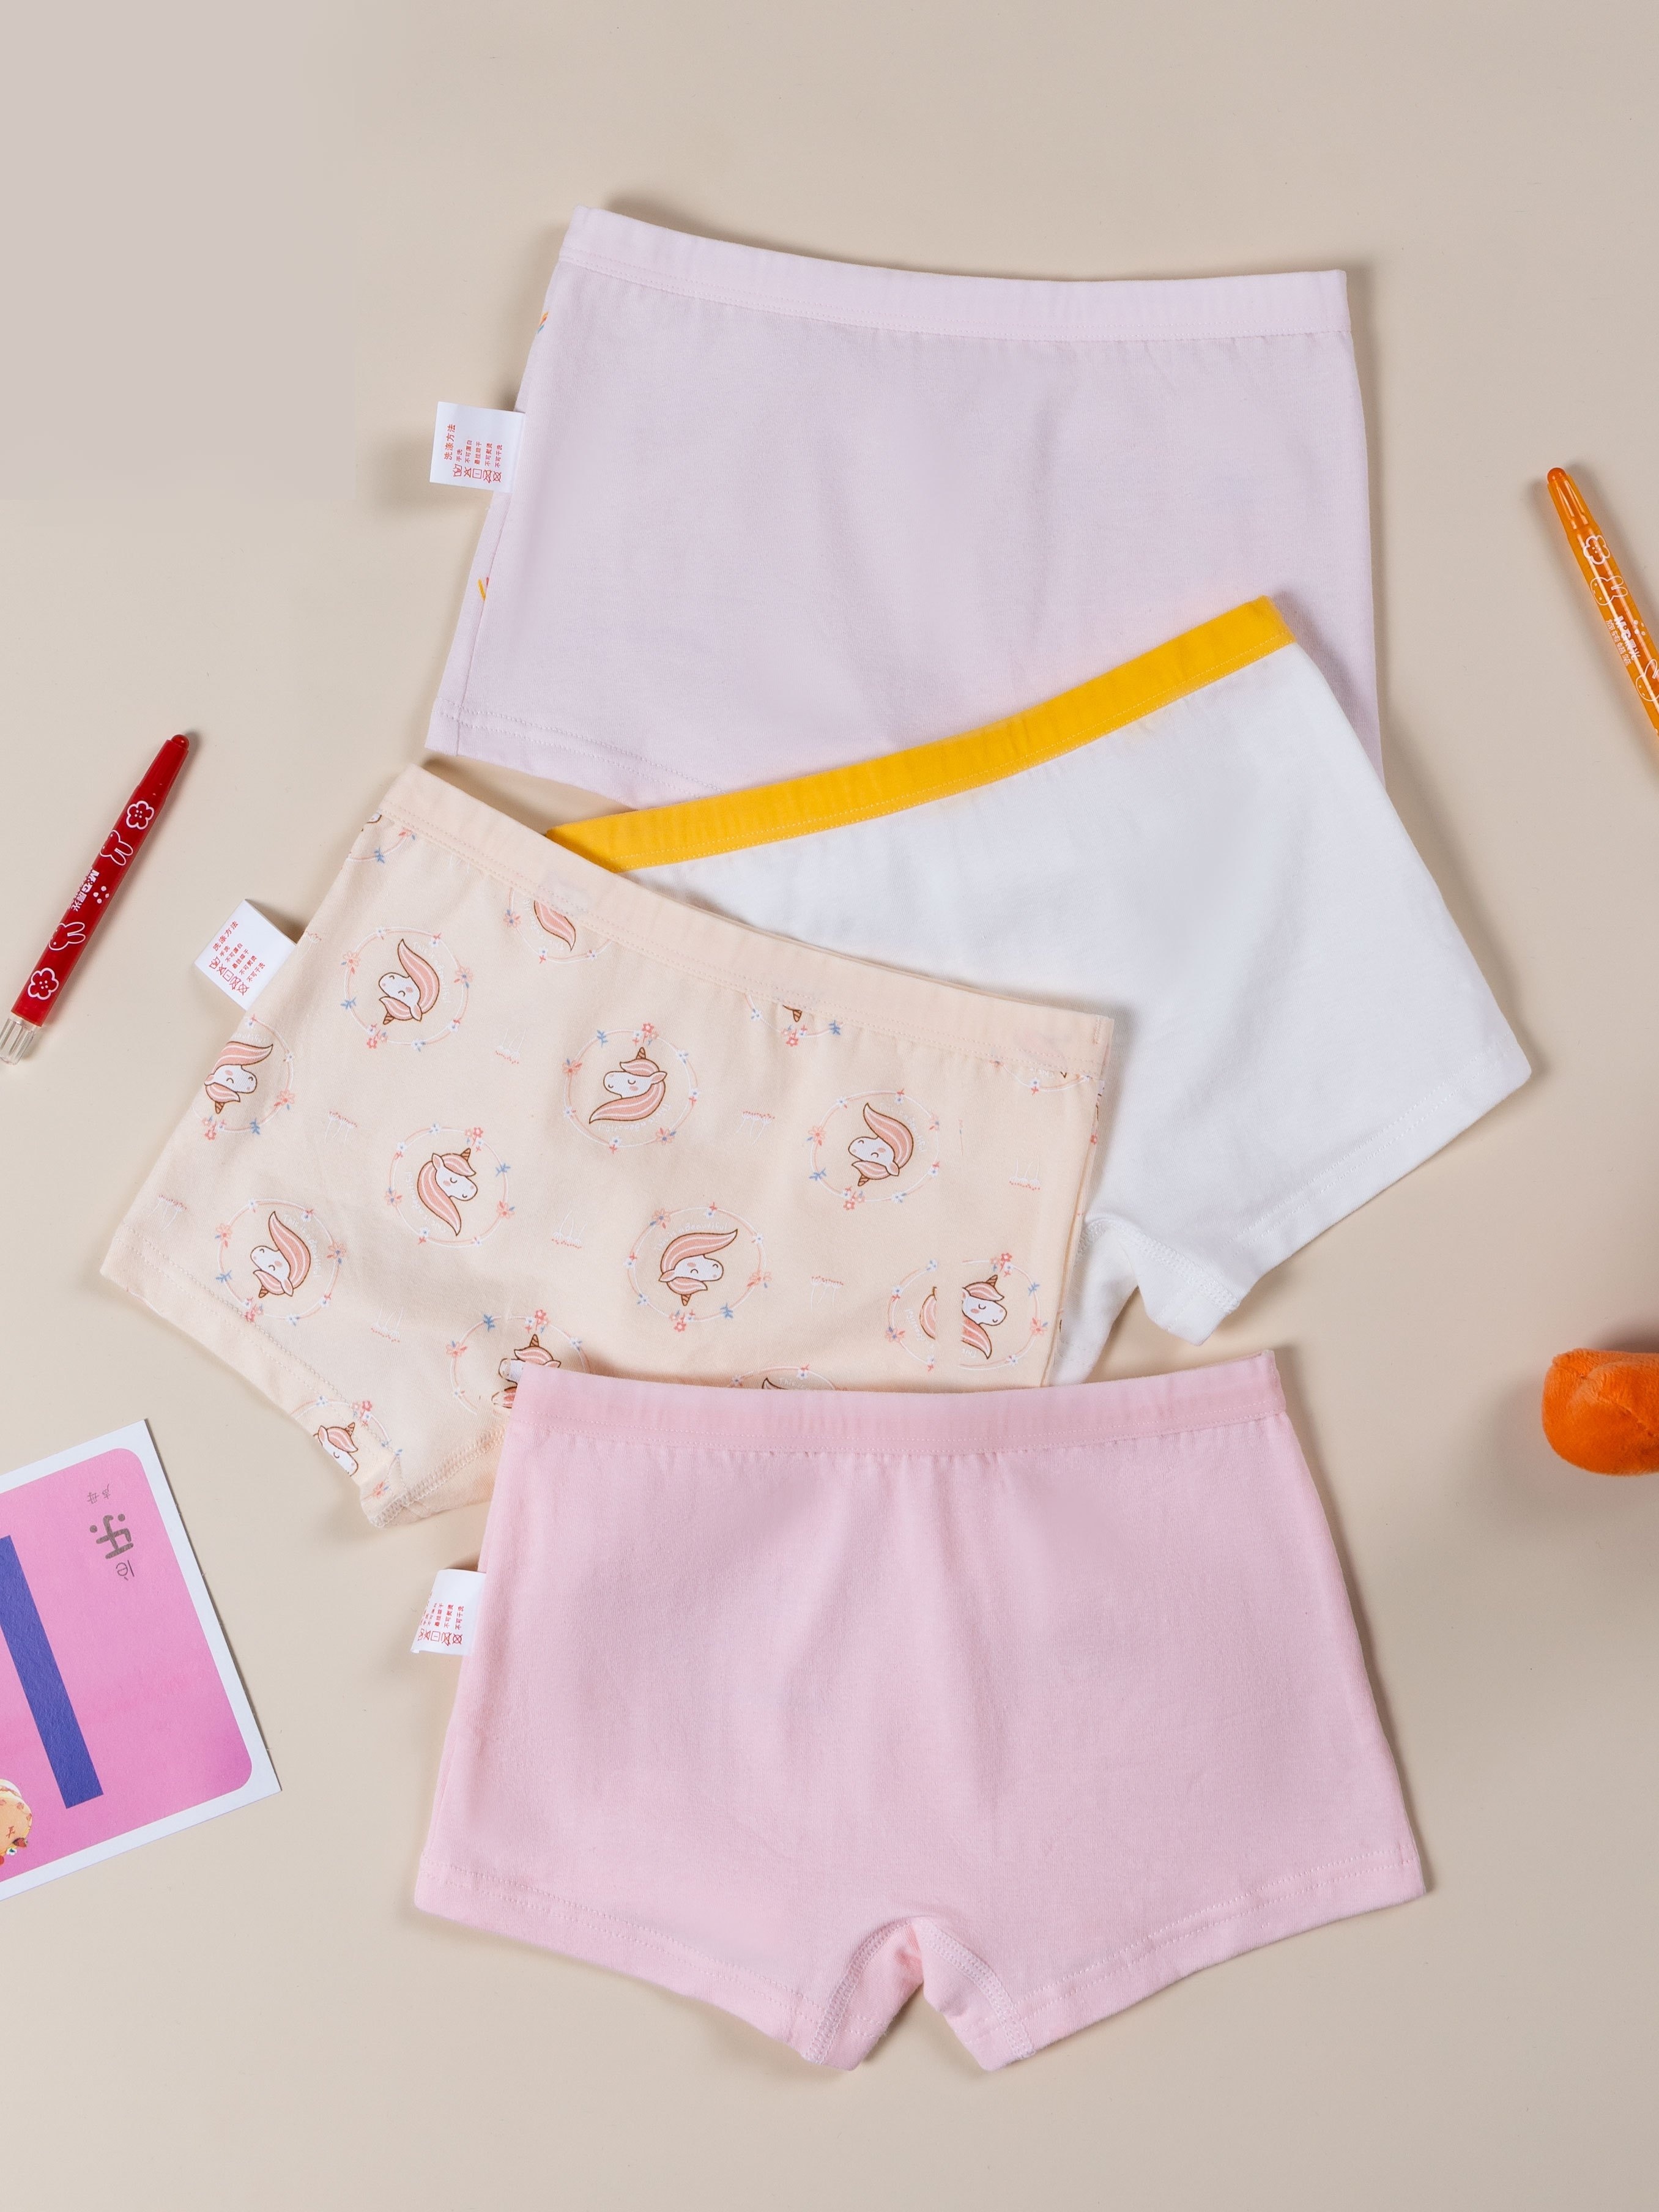 6pcs/pack Baby Girls Underwear Cotton Panties Kids Short Briefs Children  Underpants (Random Colors) 